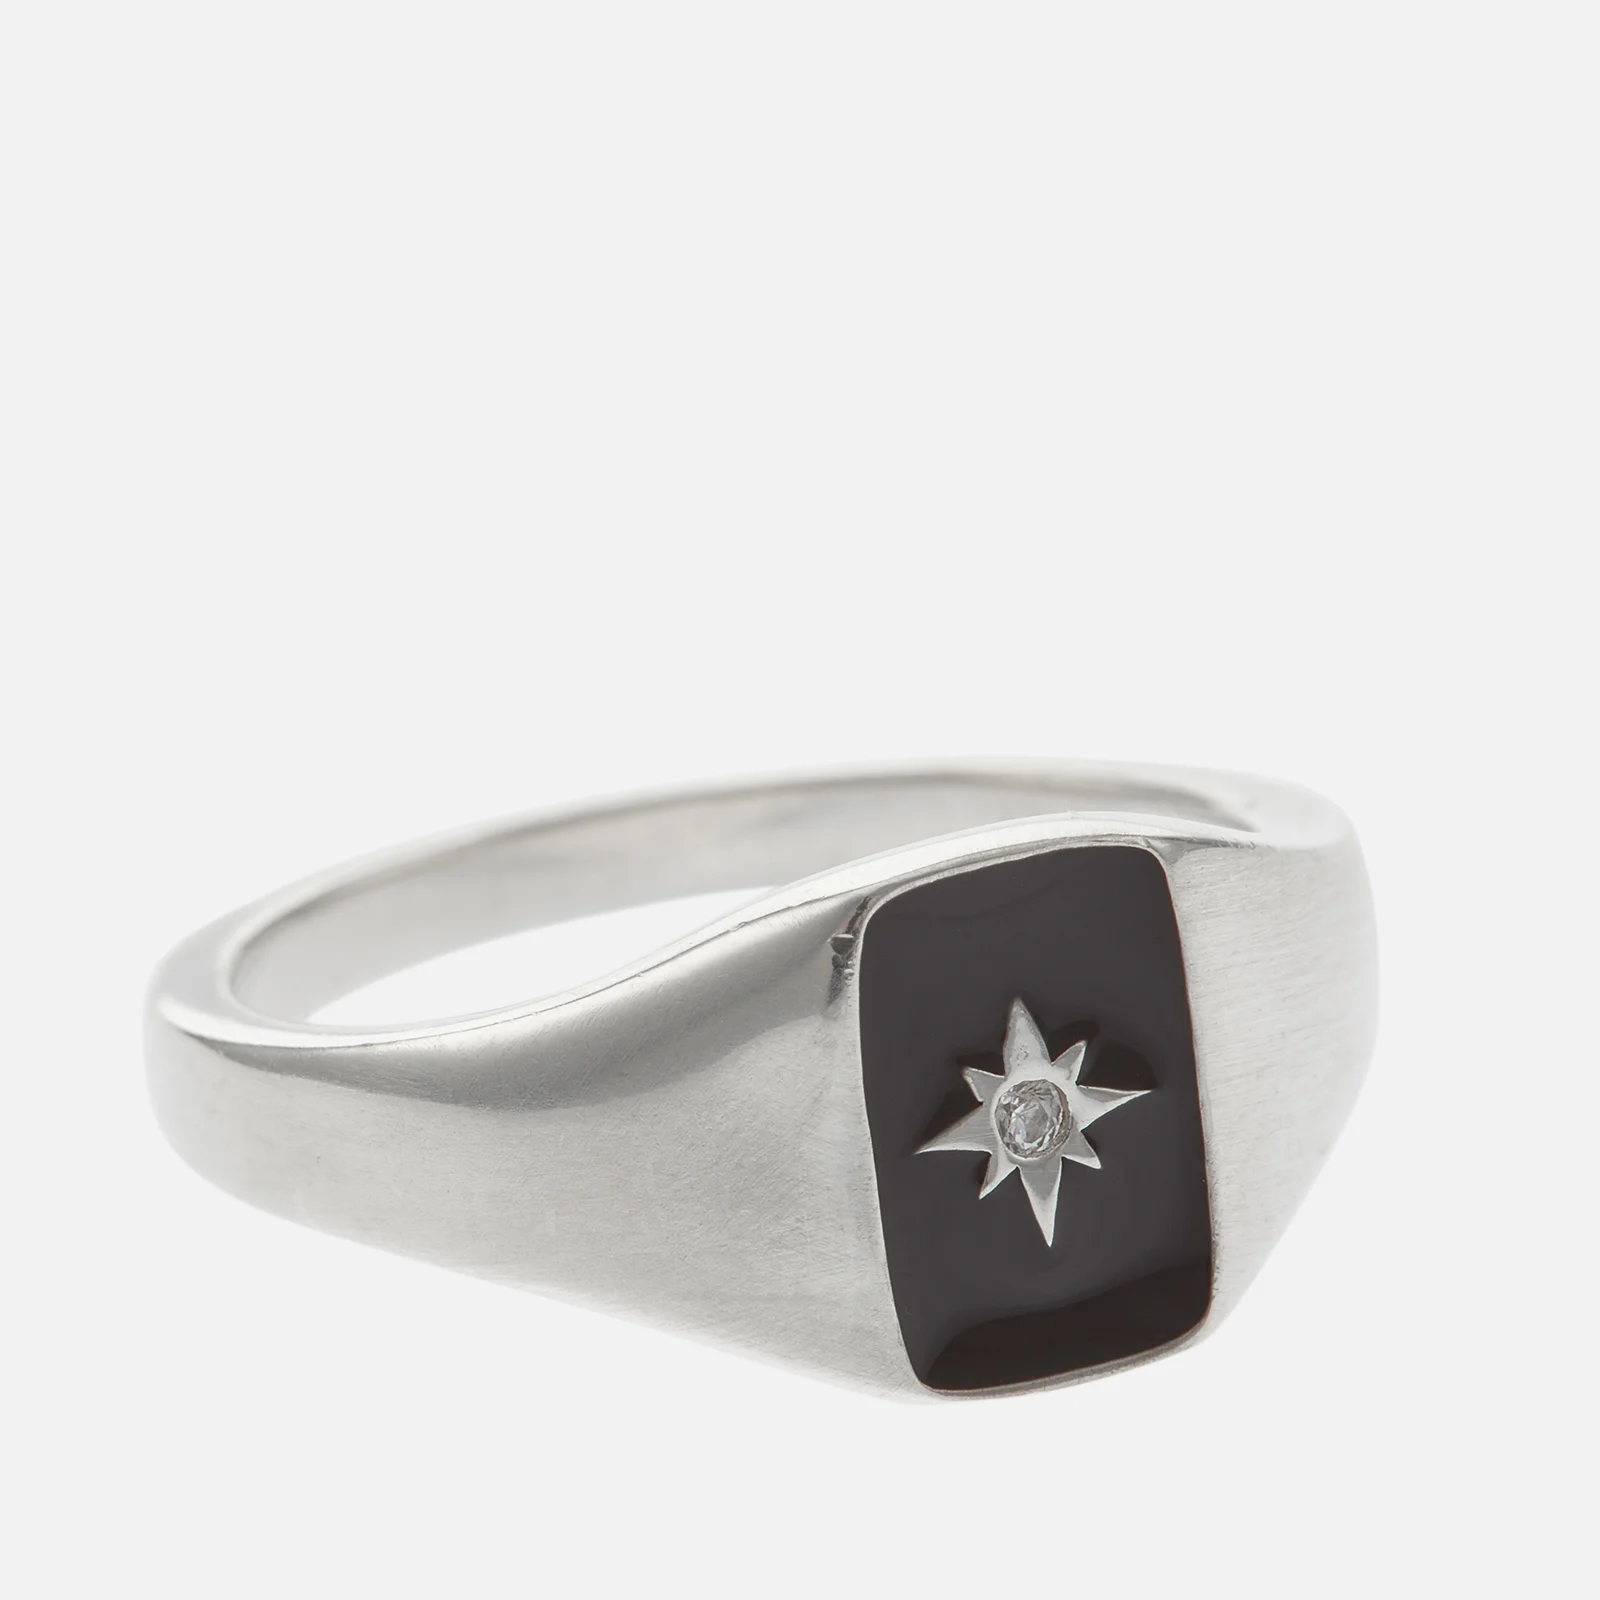 Serge Denimes Abysal Sterling Silver Signet Ring Image 1